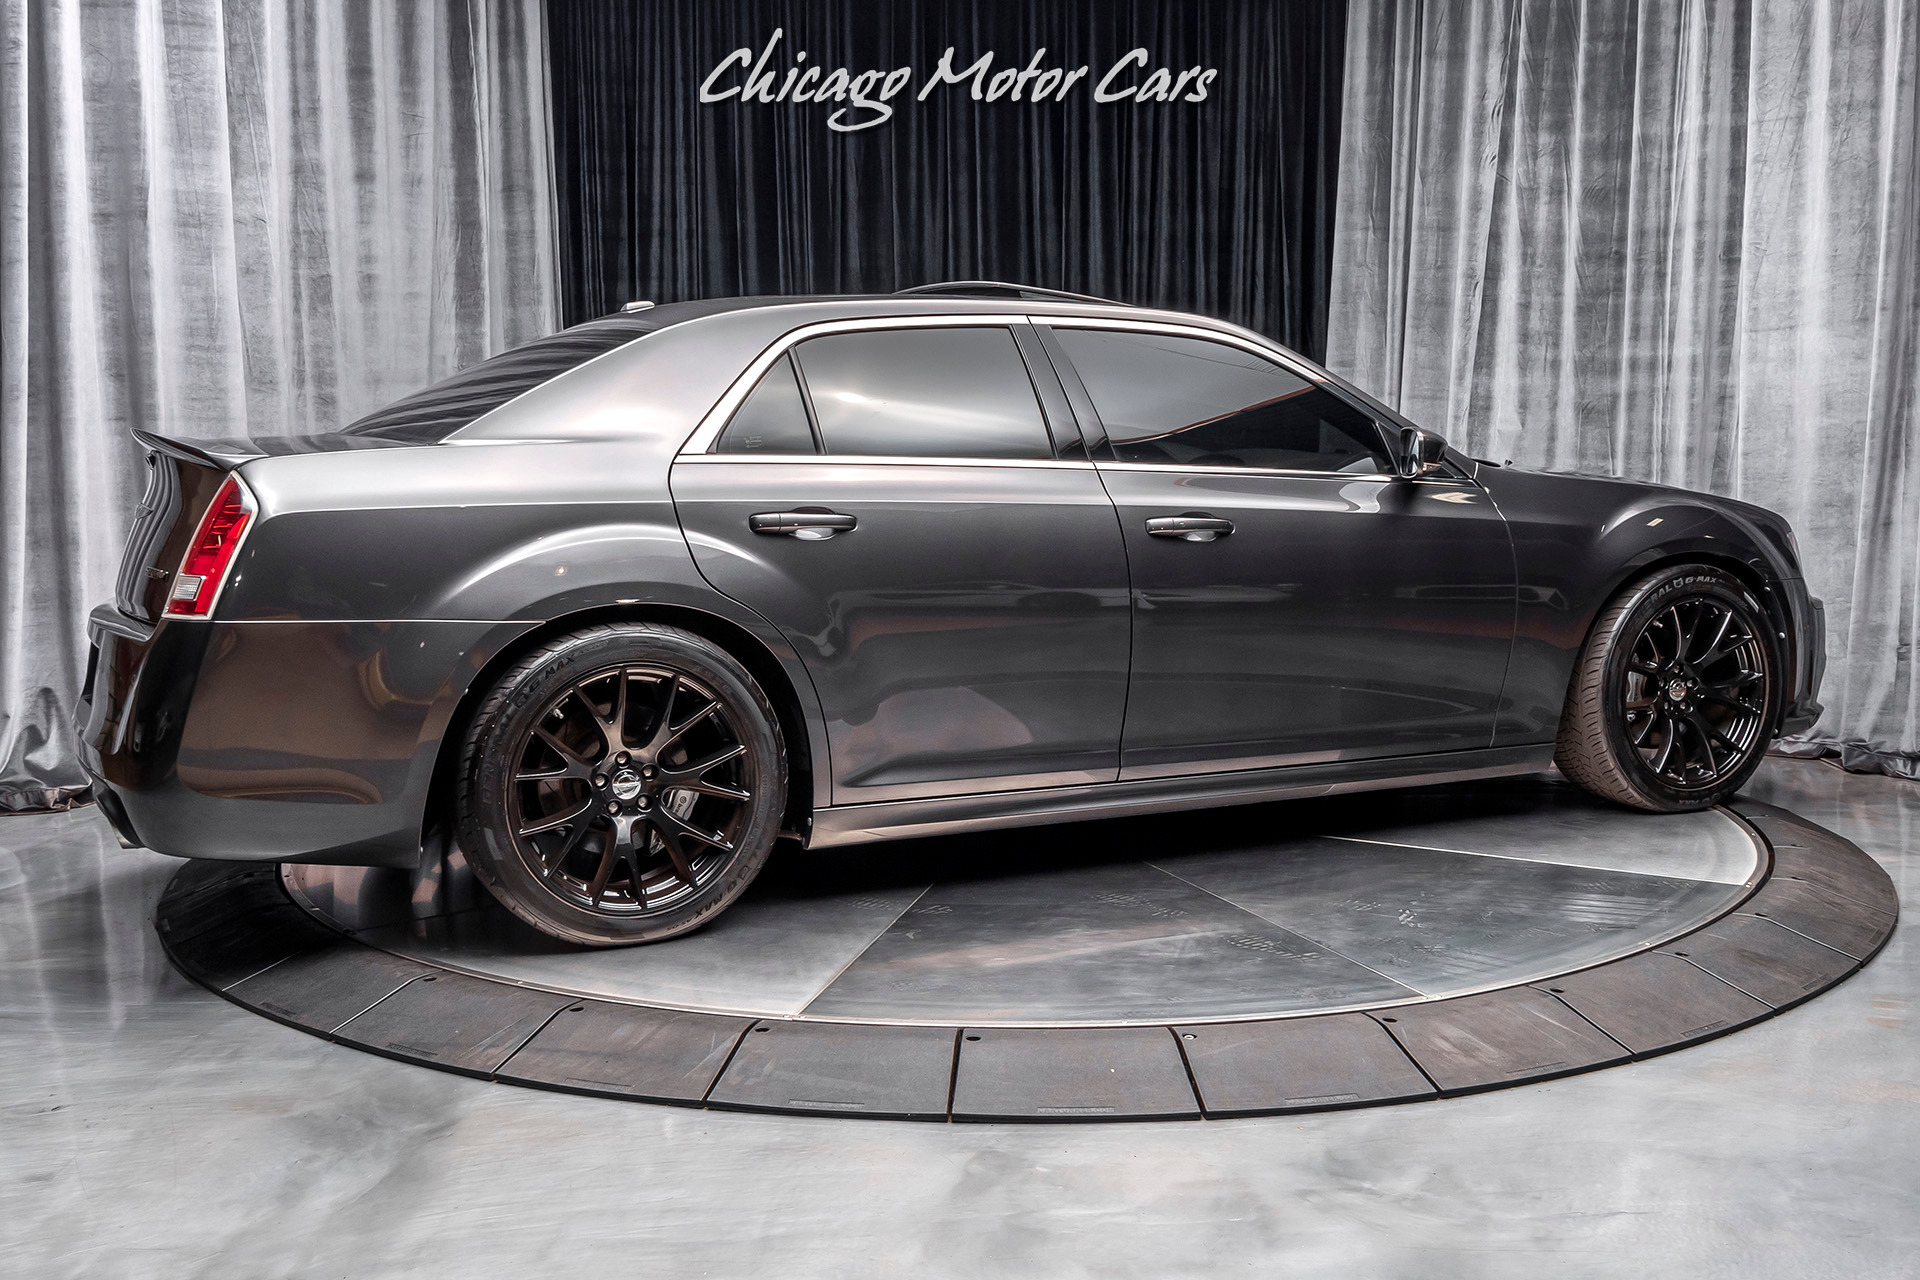 Used 2013 Chrysler 300 SRT8 Sedan LEATHER & HARMAN KARDON GROUP! For Sale  ($28,800) | Chicago Motor Cars Stock #16011A